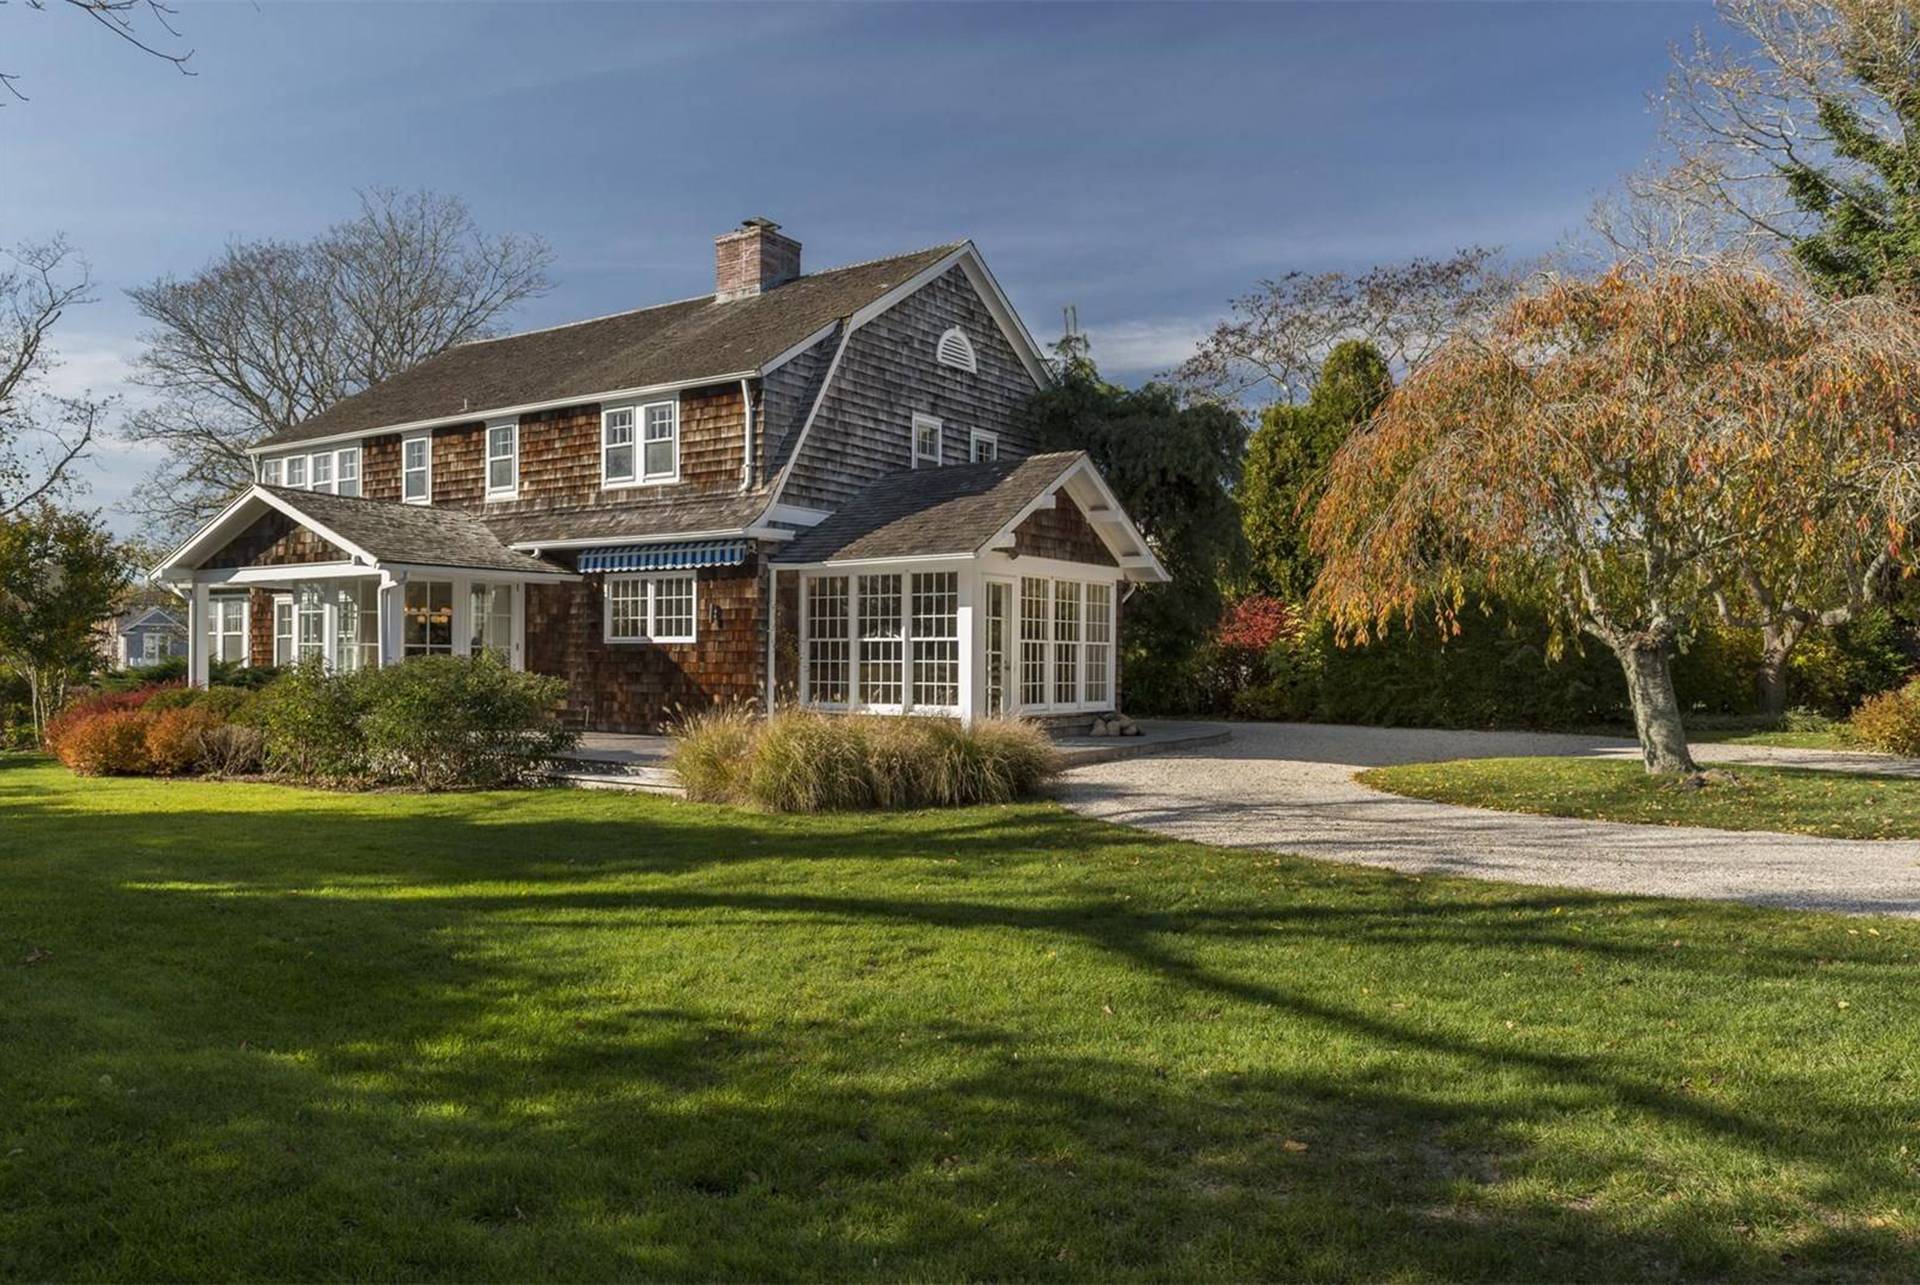 Rental Property at Village Of East Hampton, Village Of East Hampton, Hamptons, NY - Bedrooms: 4 
Bathrooms: 3  - $85,000 MO.